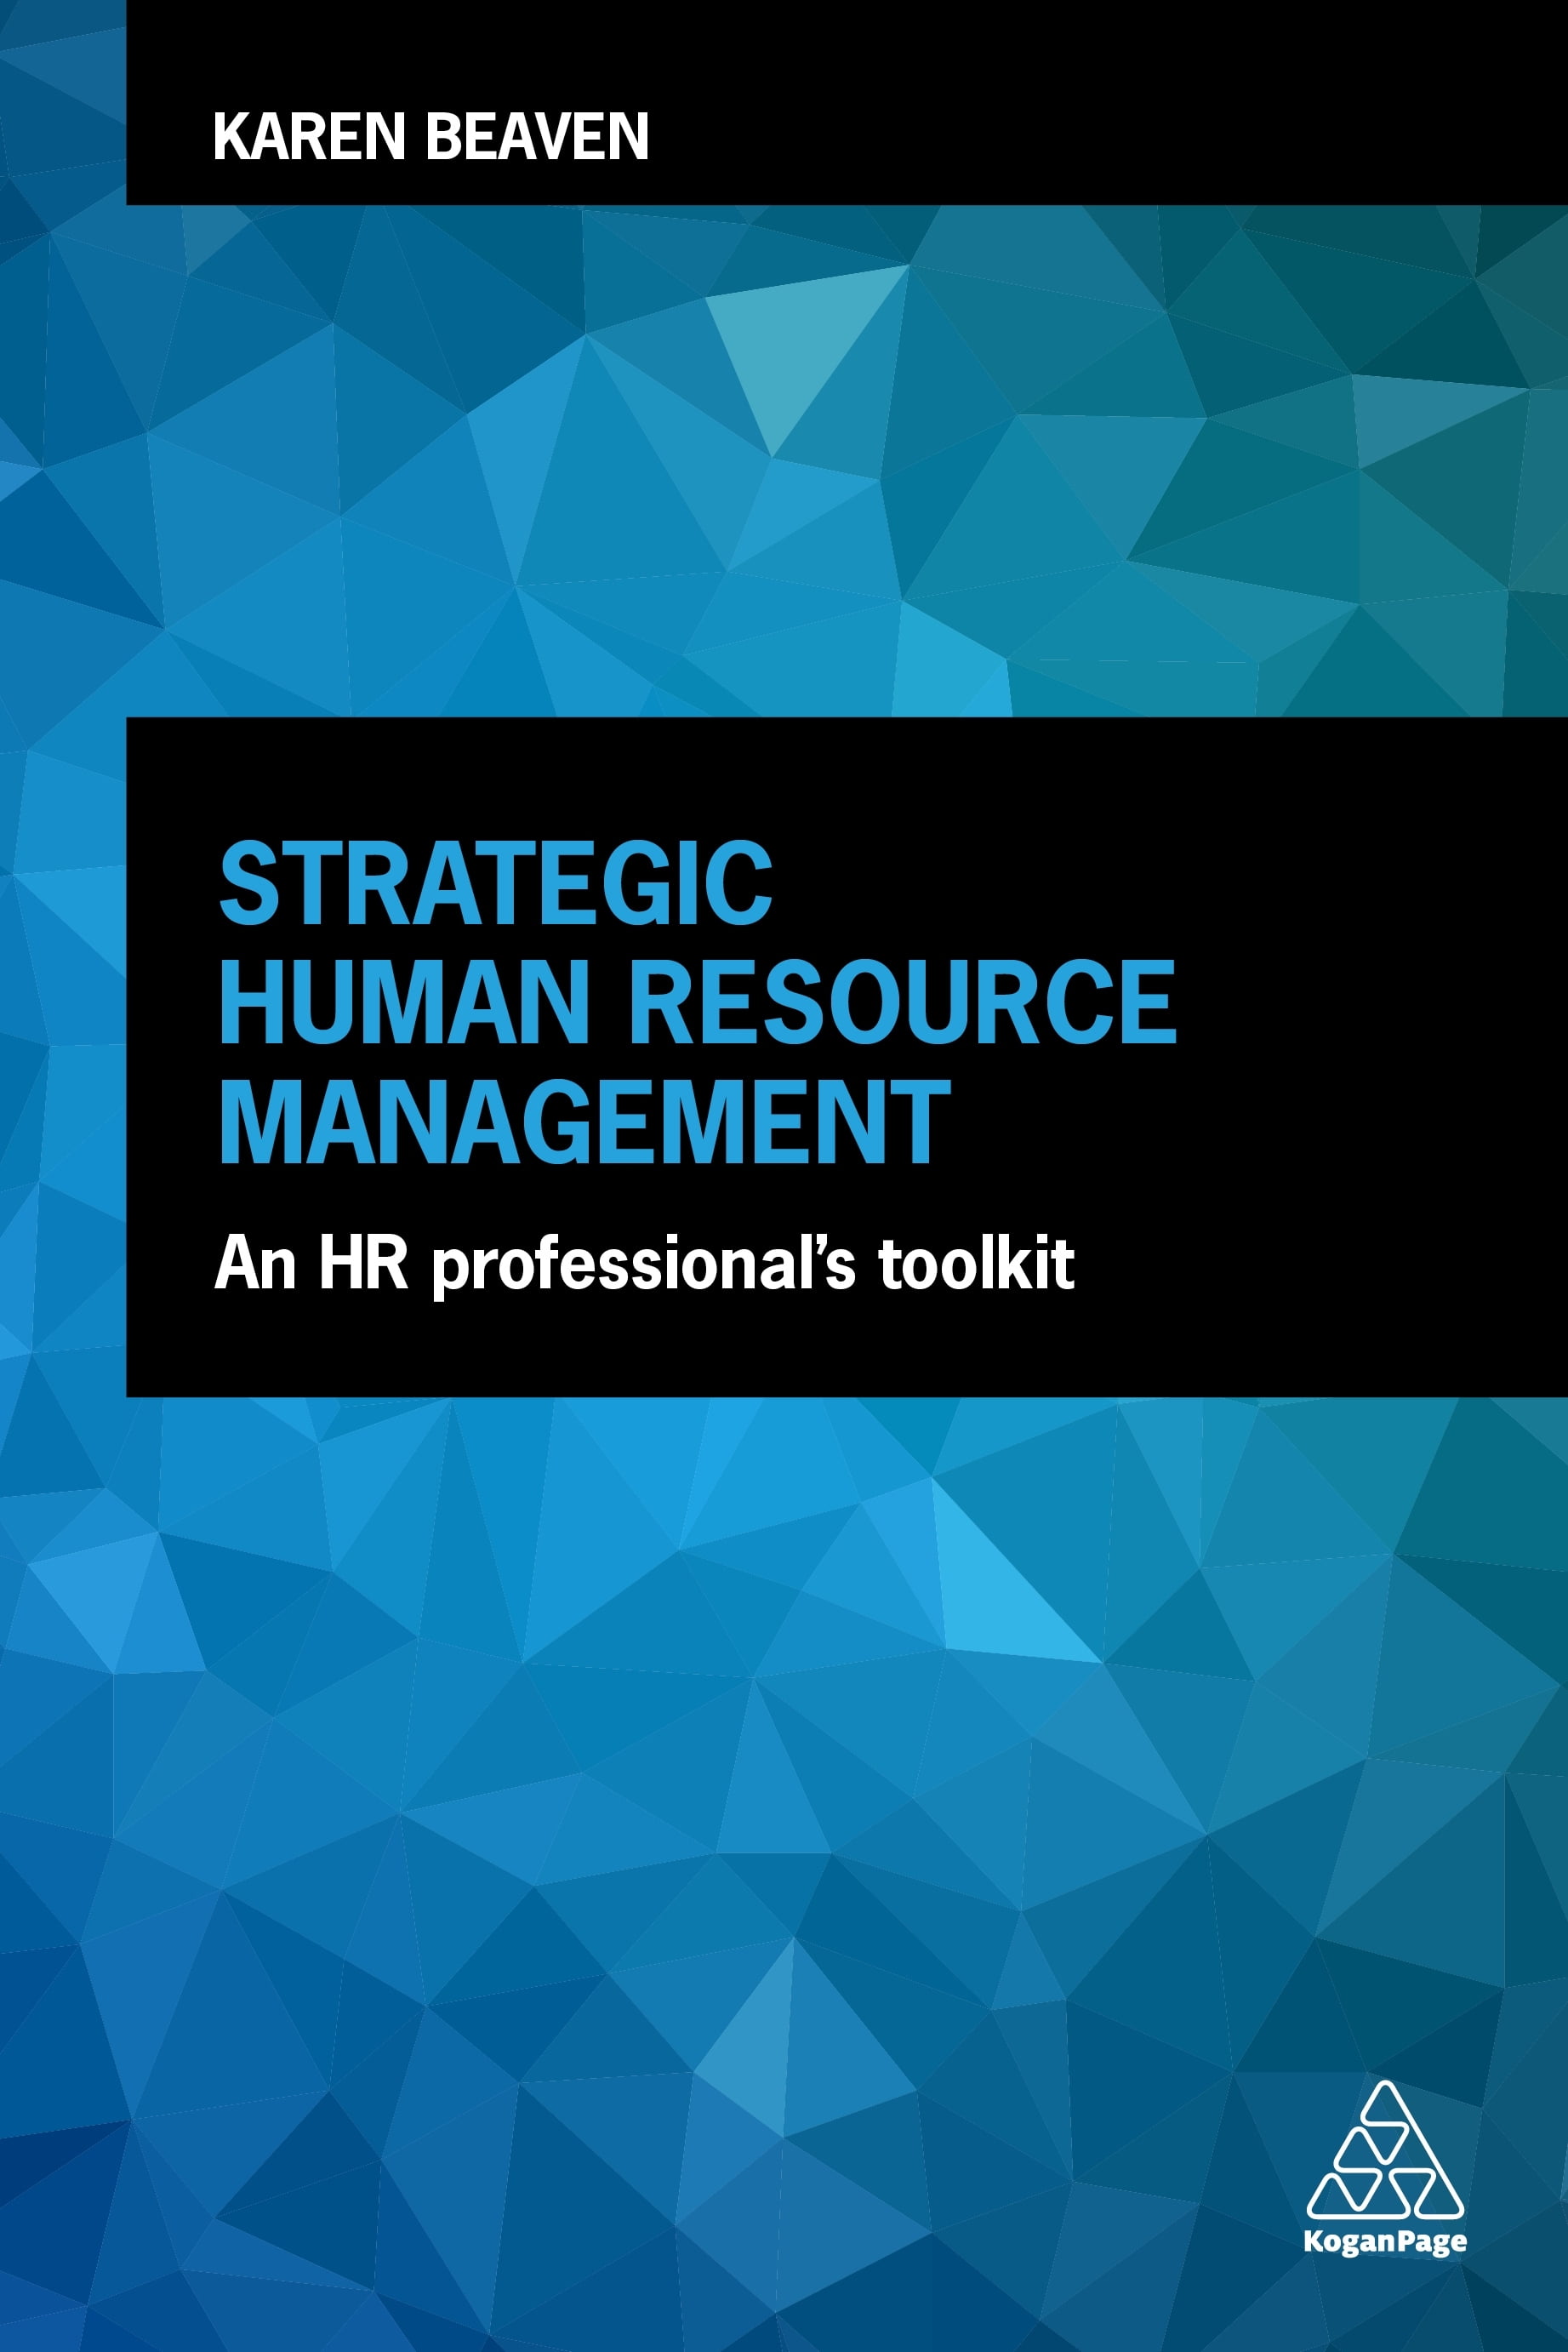 literature review on strategic human resource management